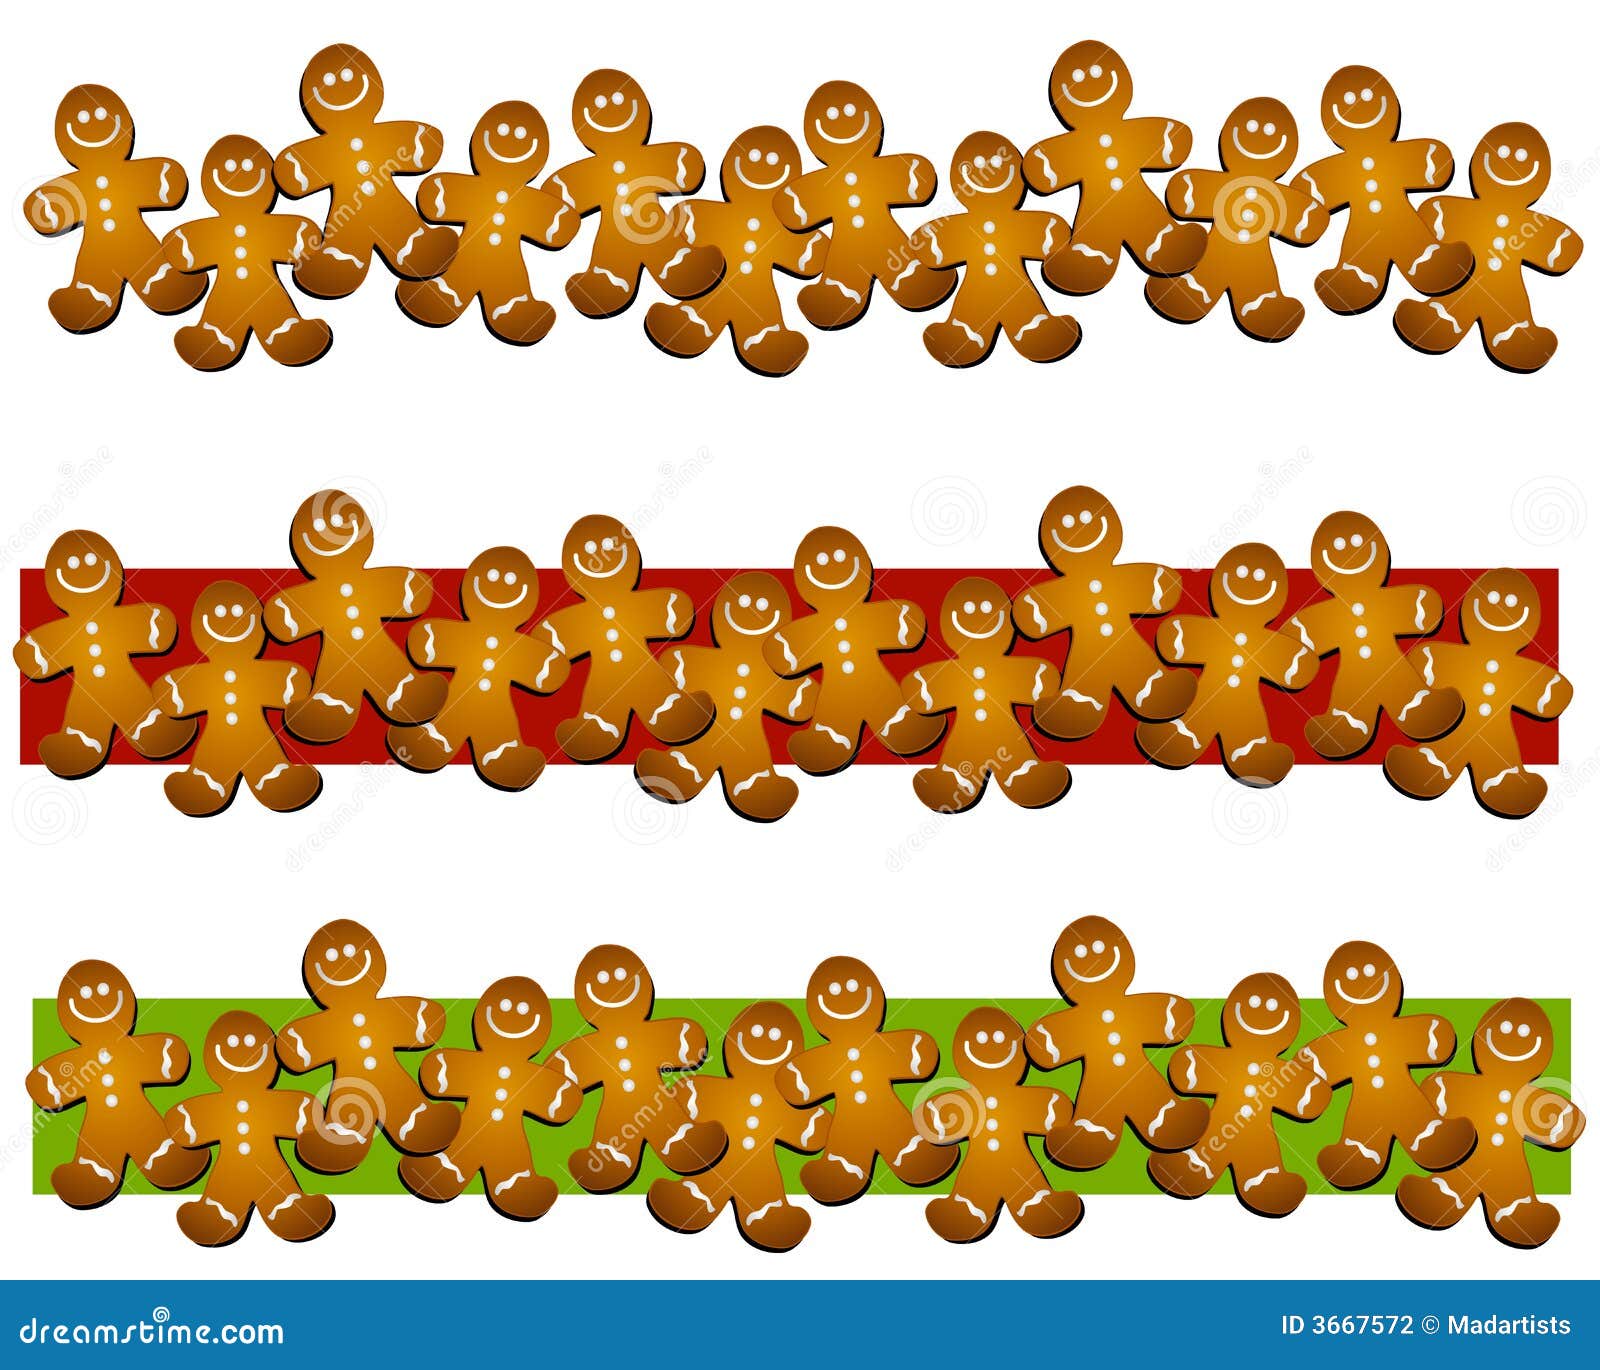 clipart gingerbread man border - photo #13